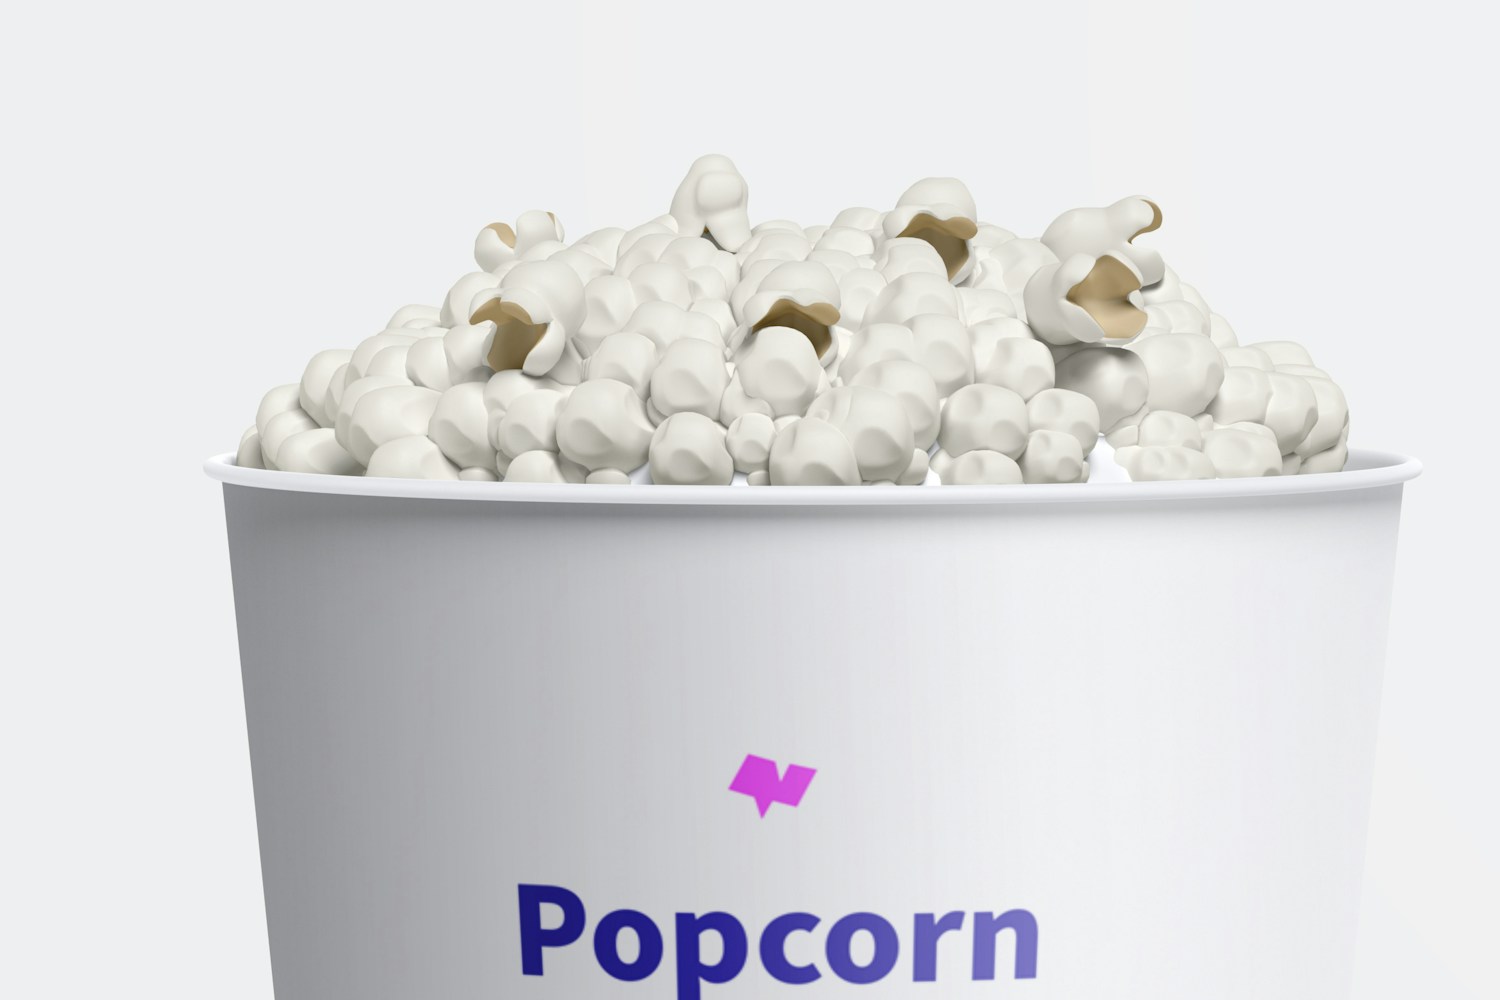 130 oz Popcorn Bucket Mockup